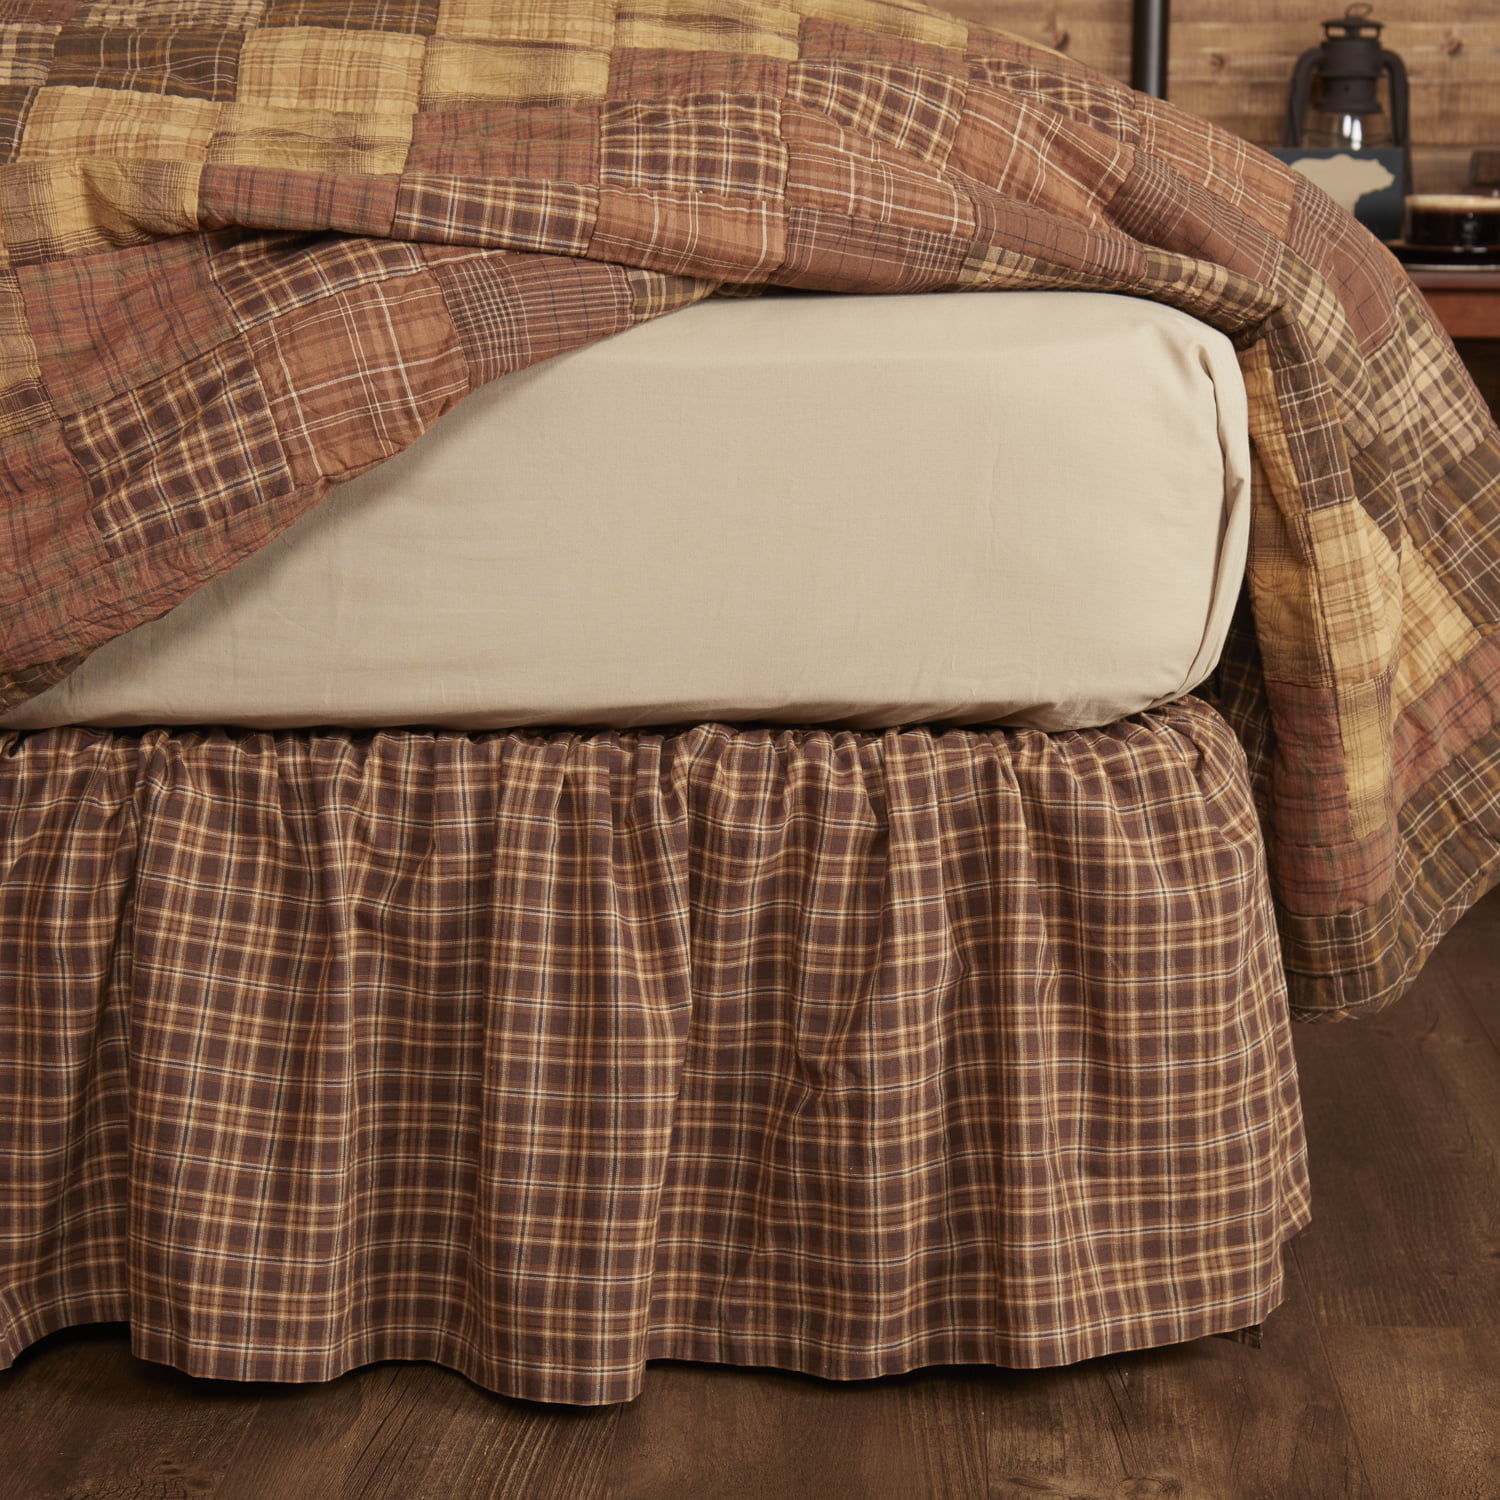 TARTAN RED PLAID King Bed Skirt Dust Ruffle Plaid Cotton Rustic Cabin Lodge VHC 